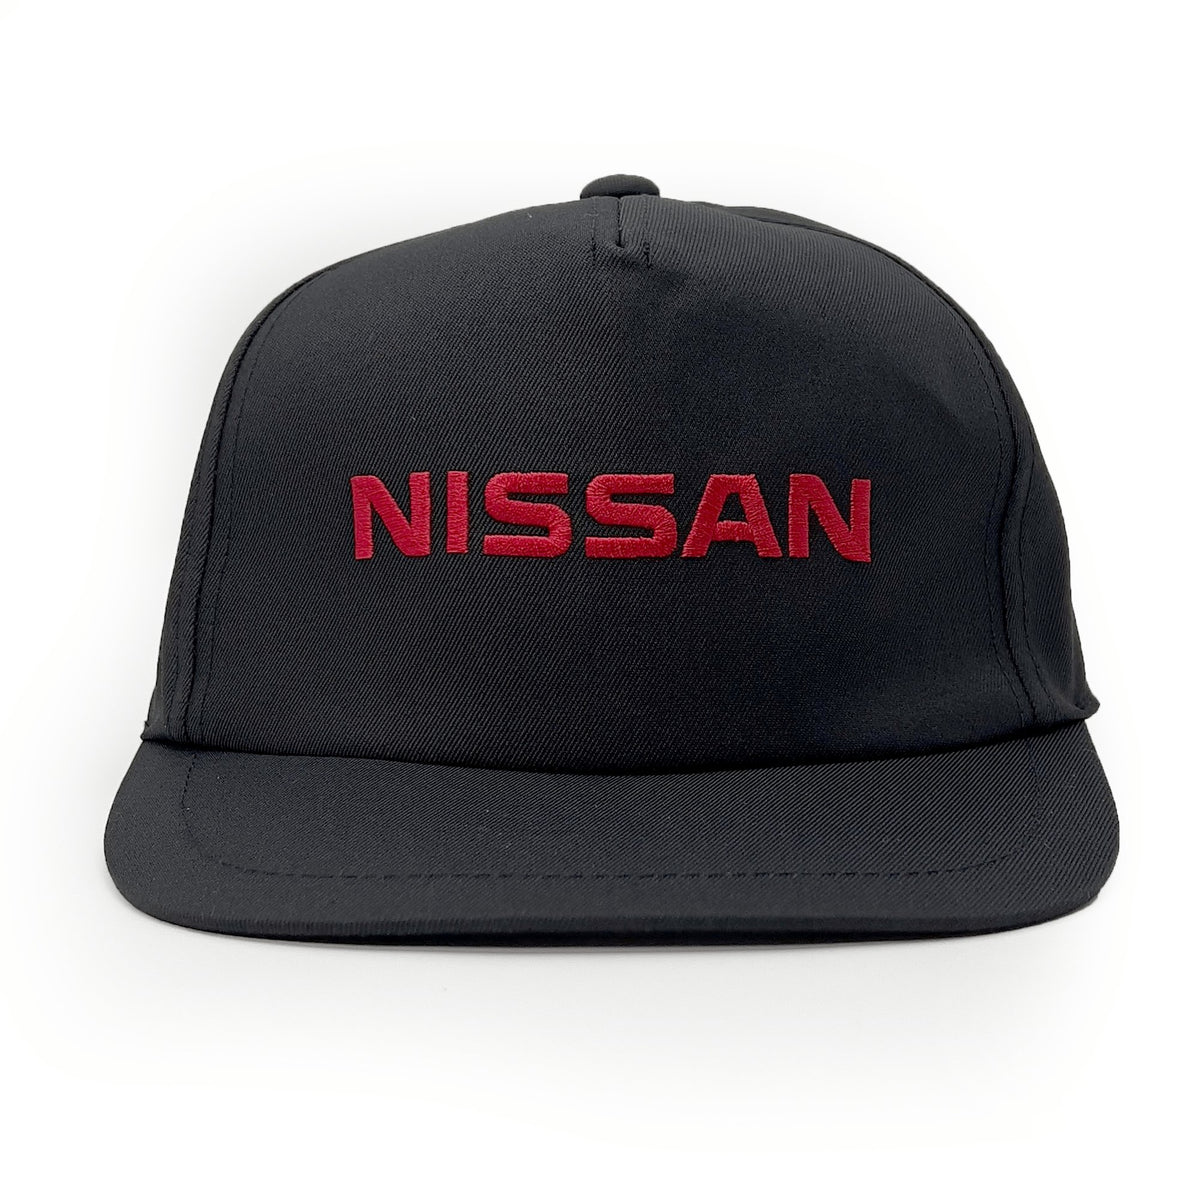 New Japanese JDM Nissan Pitwork Mechanic Uniform Hat Cap Black - Sugoi JDM